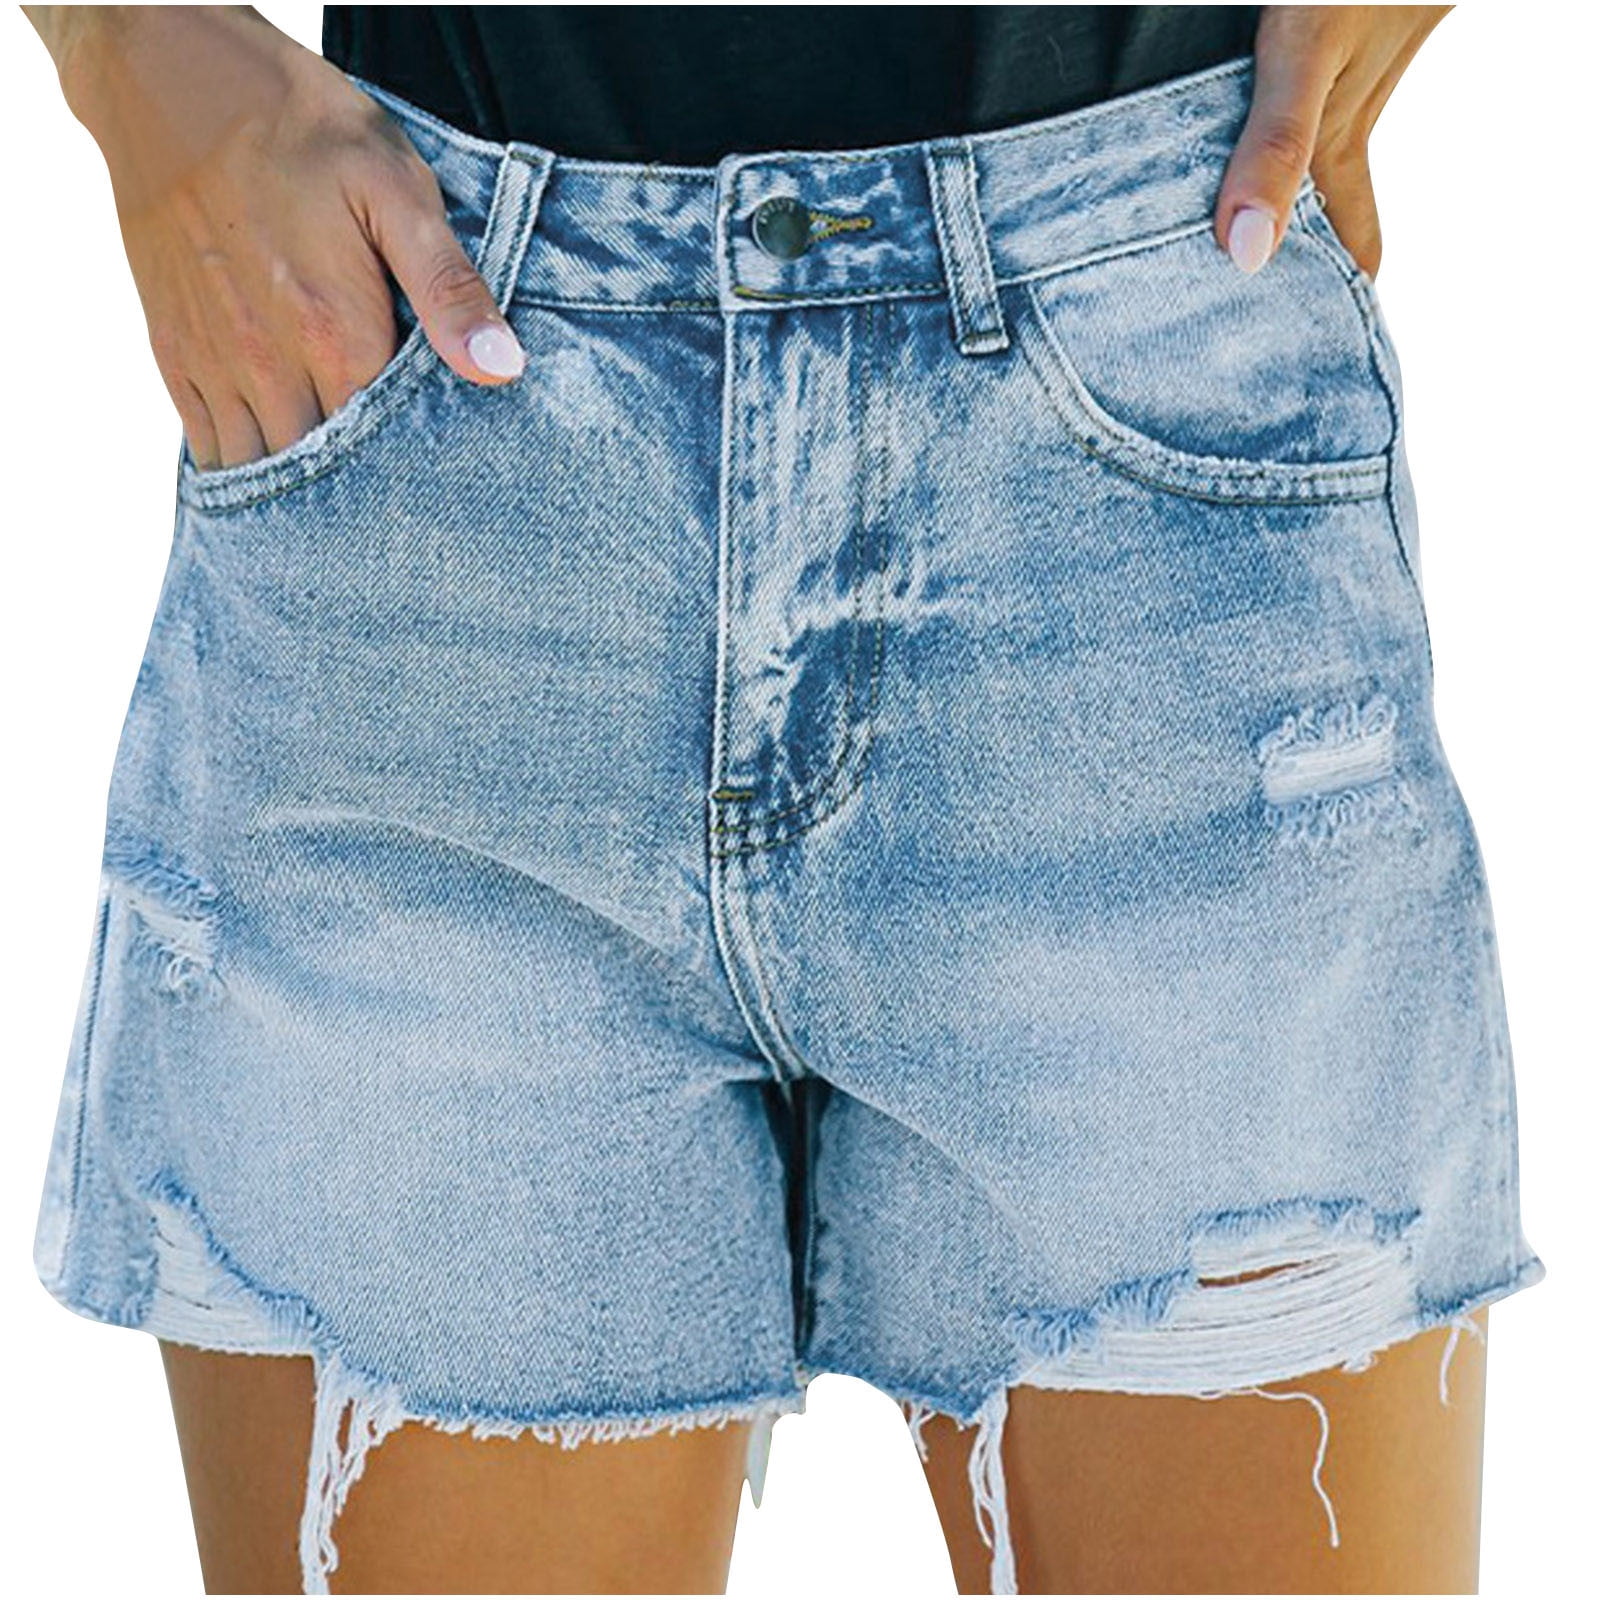 YYDGH Women's Denim Shorts Casual Mid Waist Ripped Jean